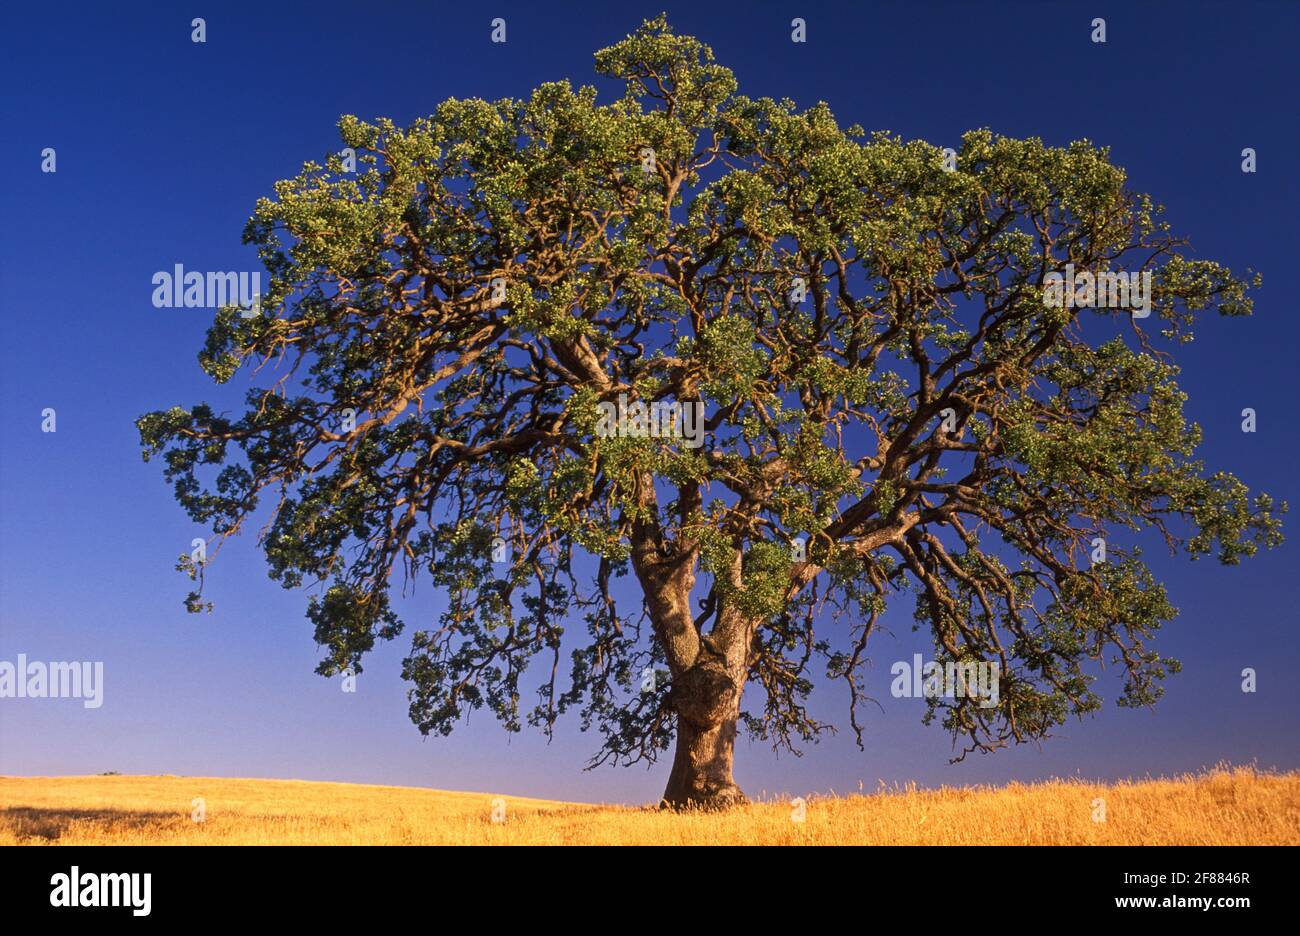 USA, California, Paso Robles, quercia albero contro un cielo blu Foto Stock